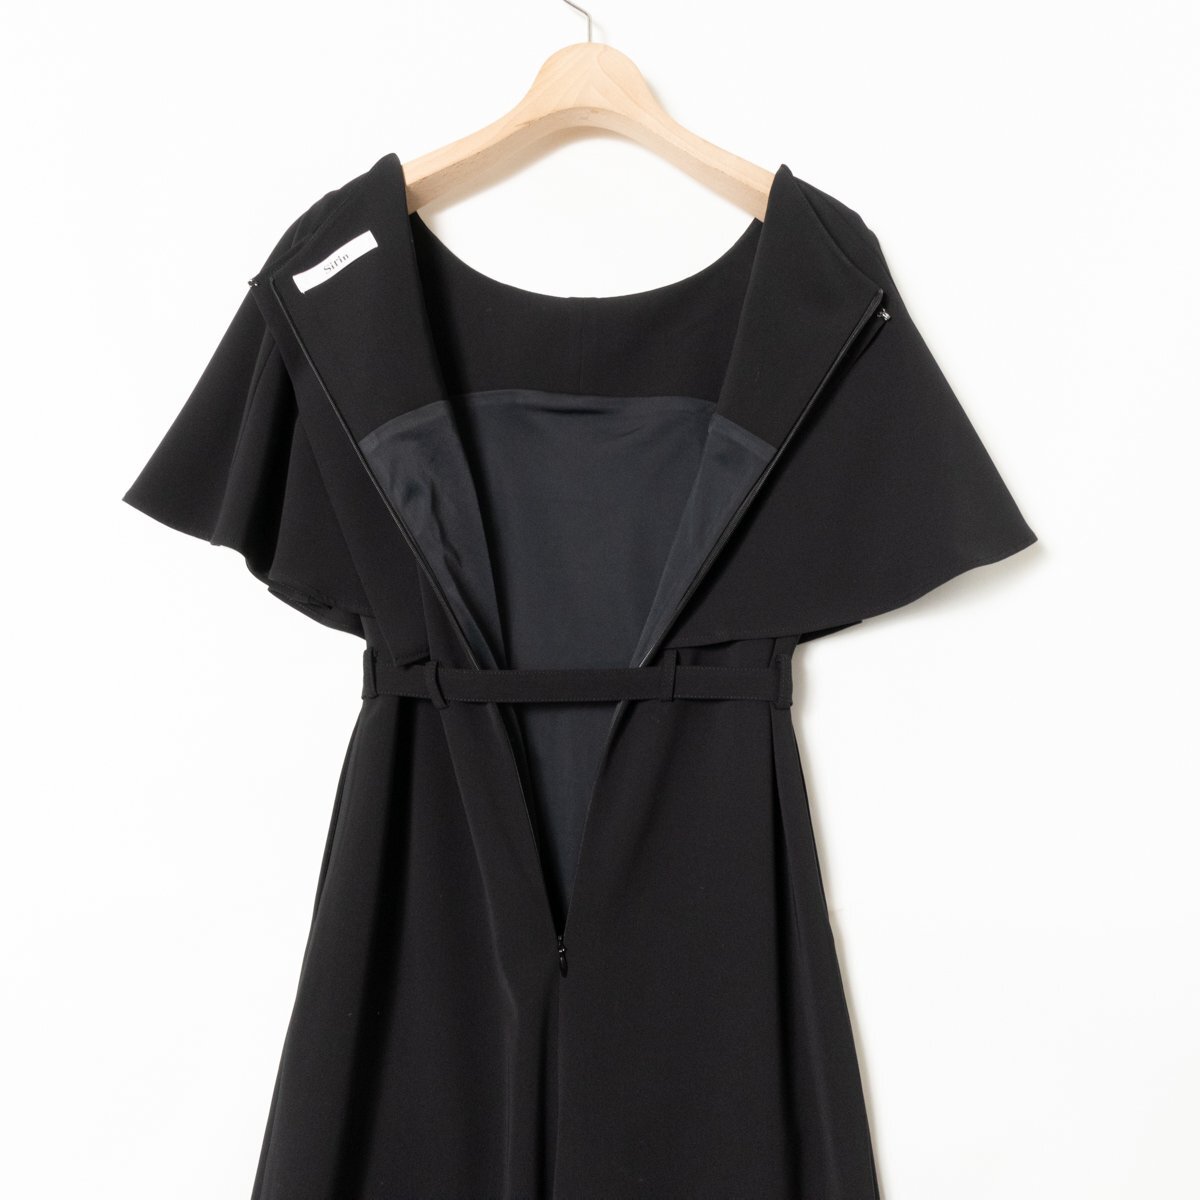 Sirinsi Lynn small pattern for women cape design all-in-one waist belt 79146308-SR S polyester black black beautiful . wedding party 